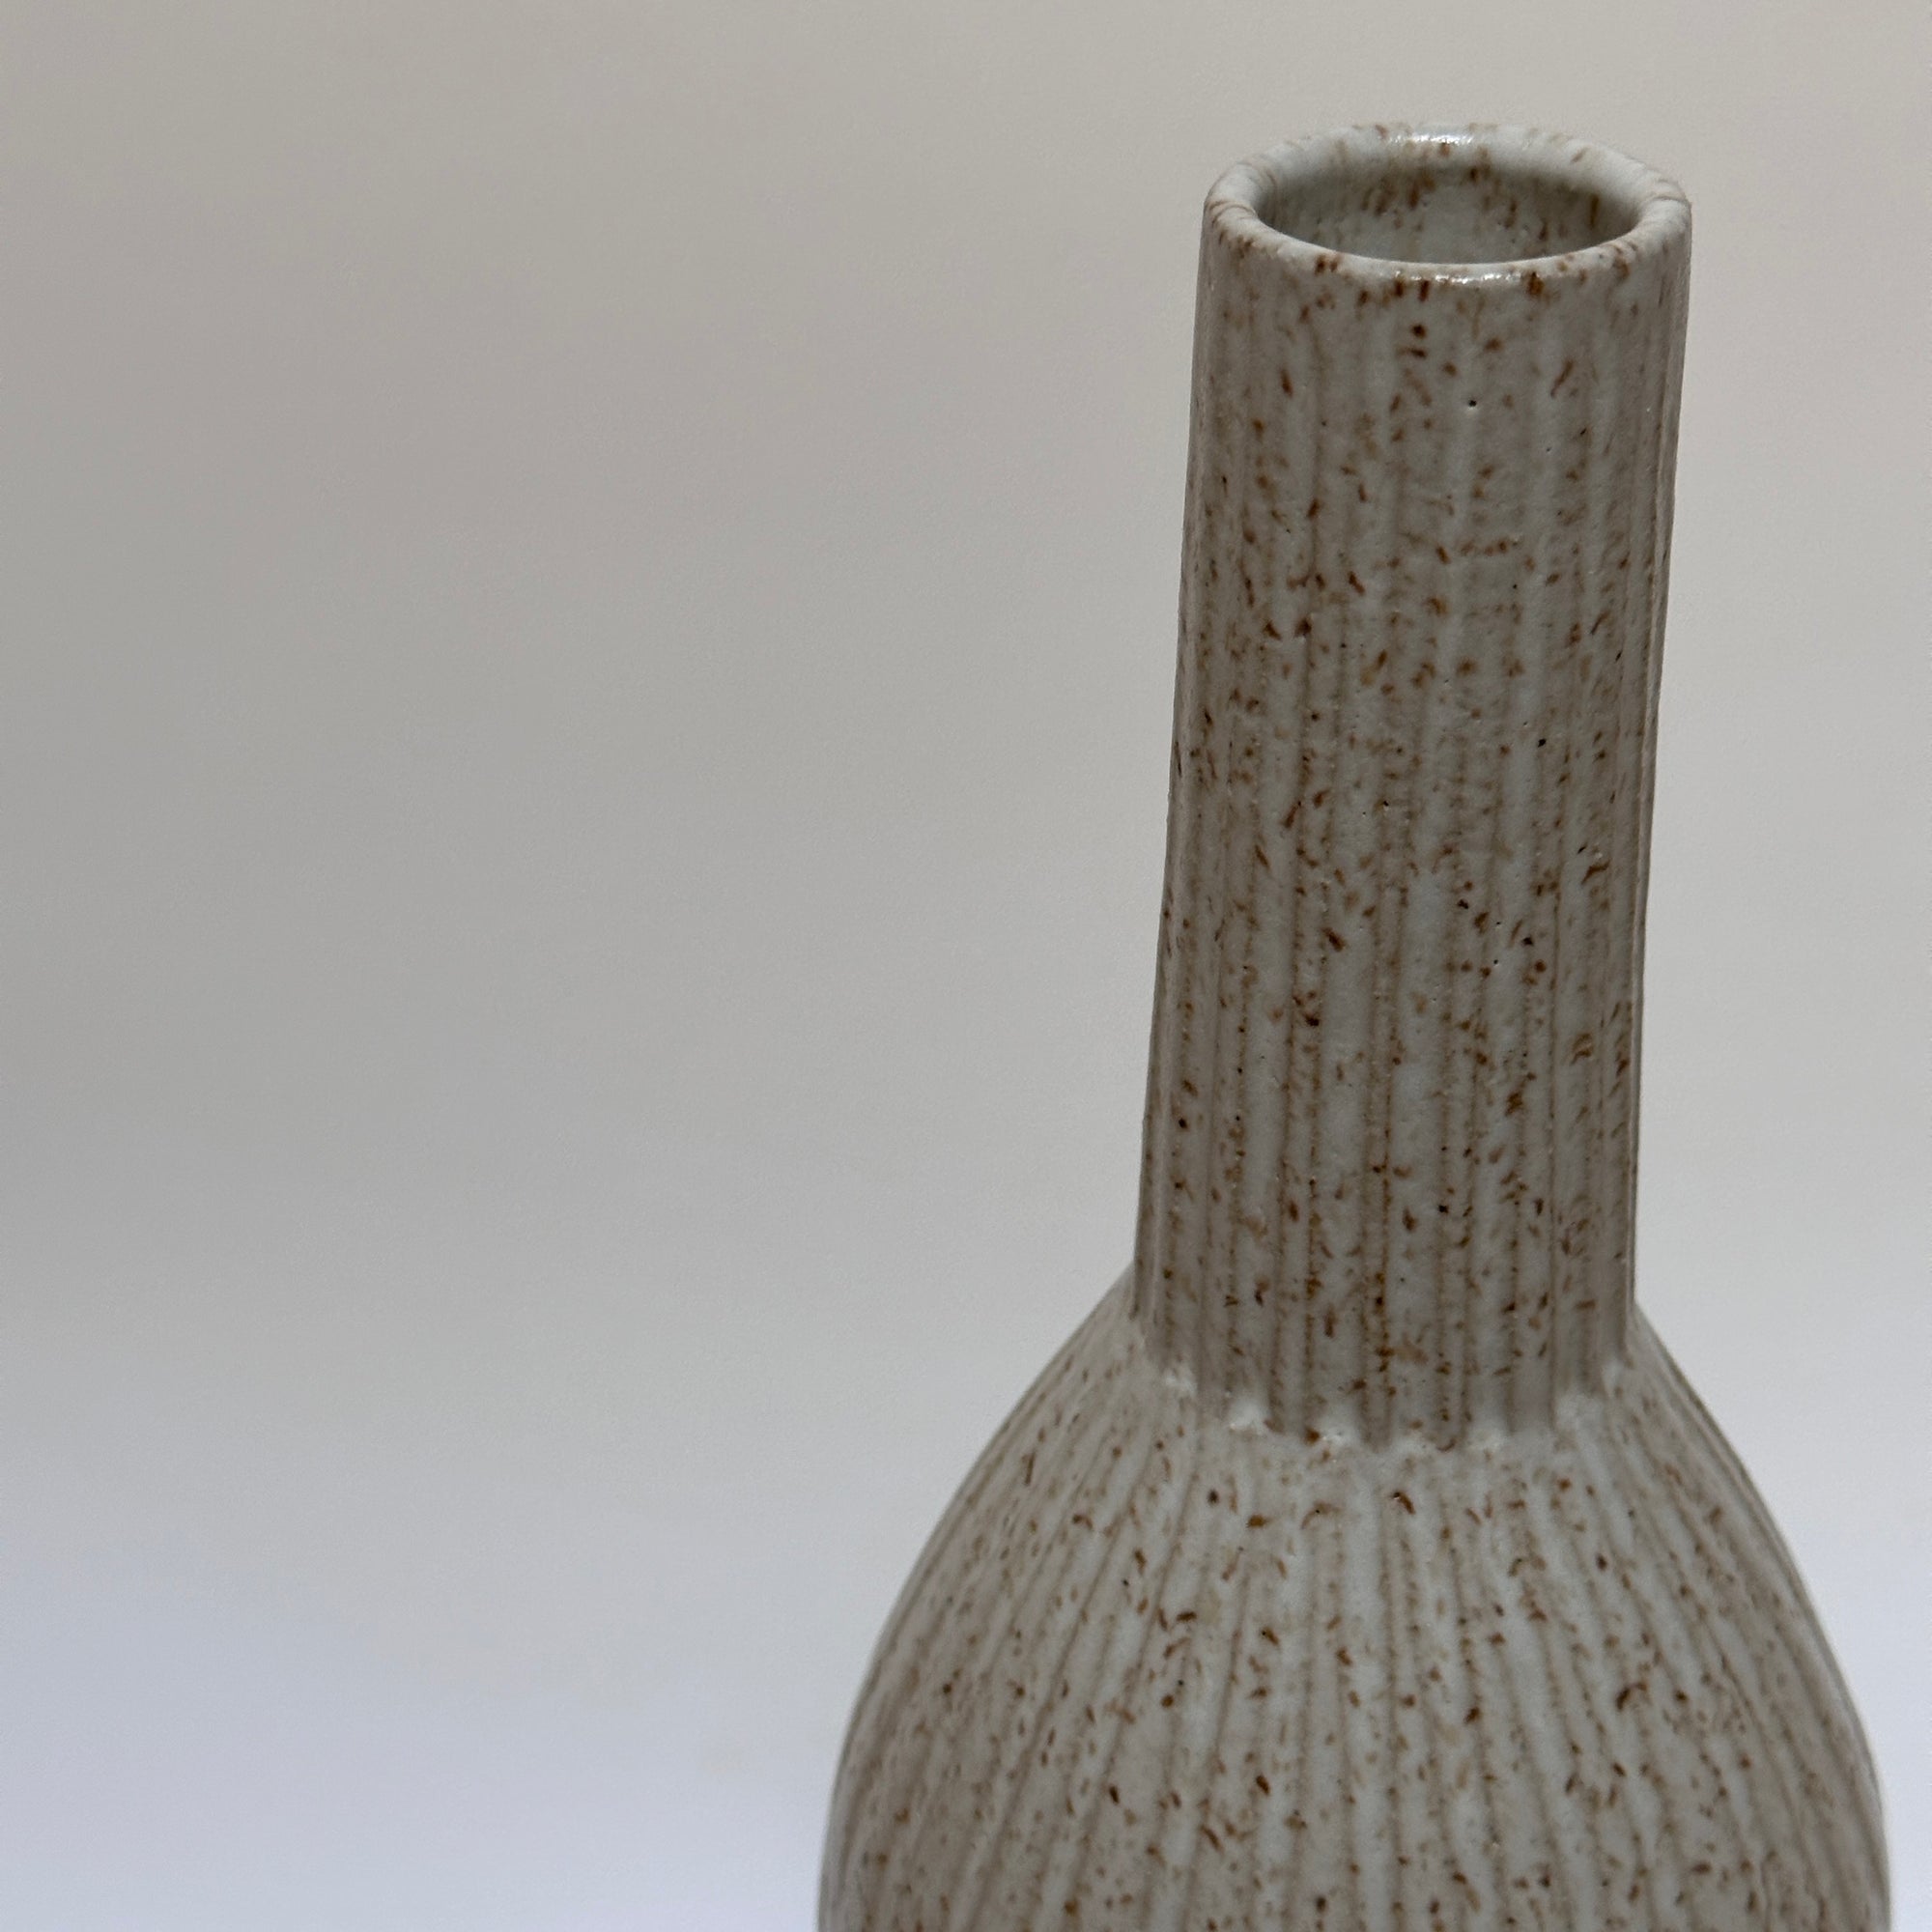 Speckled Tall Bottle Vase